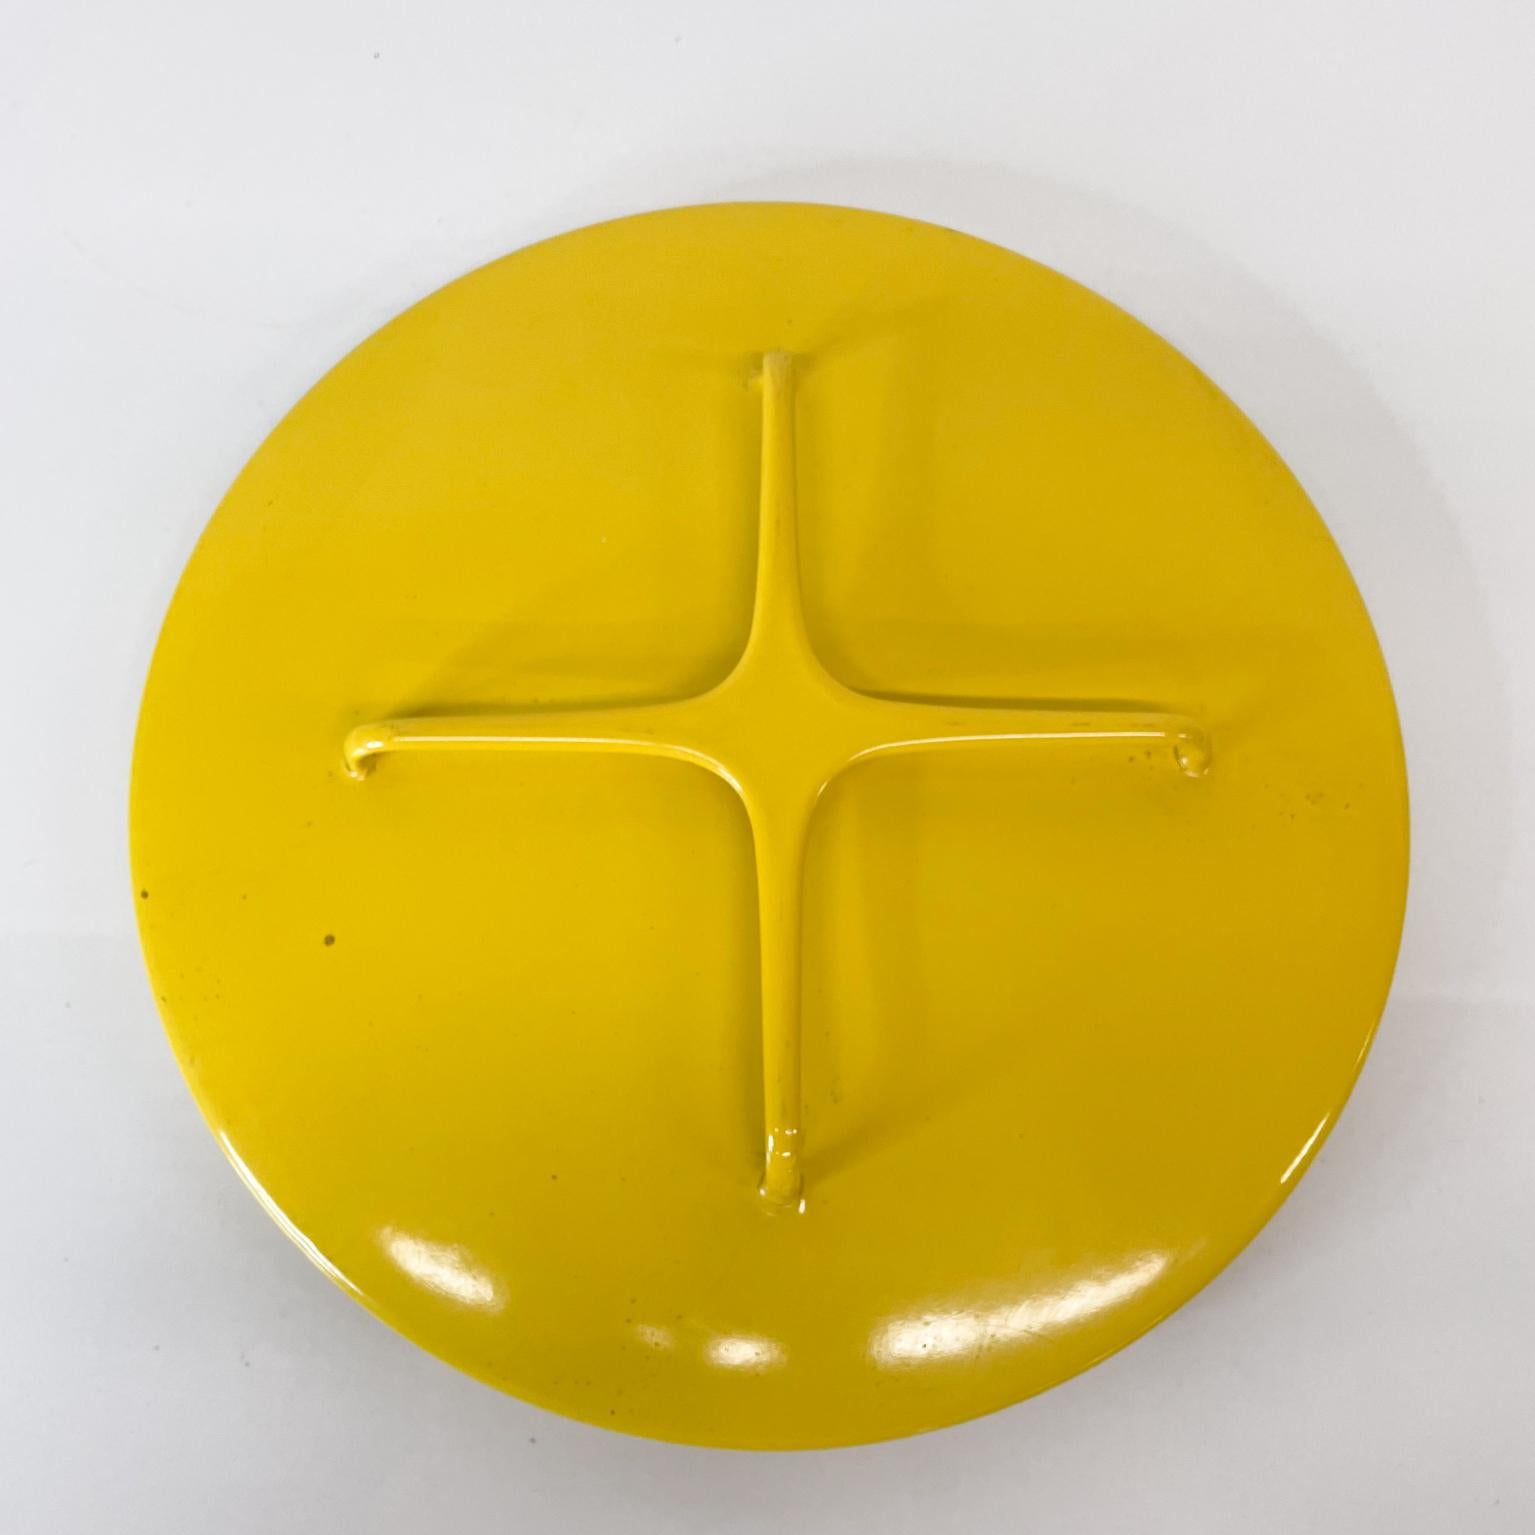 Mid-Century Modern Dansk Designs Yellow Enamelware Casserole Cover Lid Trivet Top IHQ France 1960s